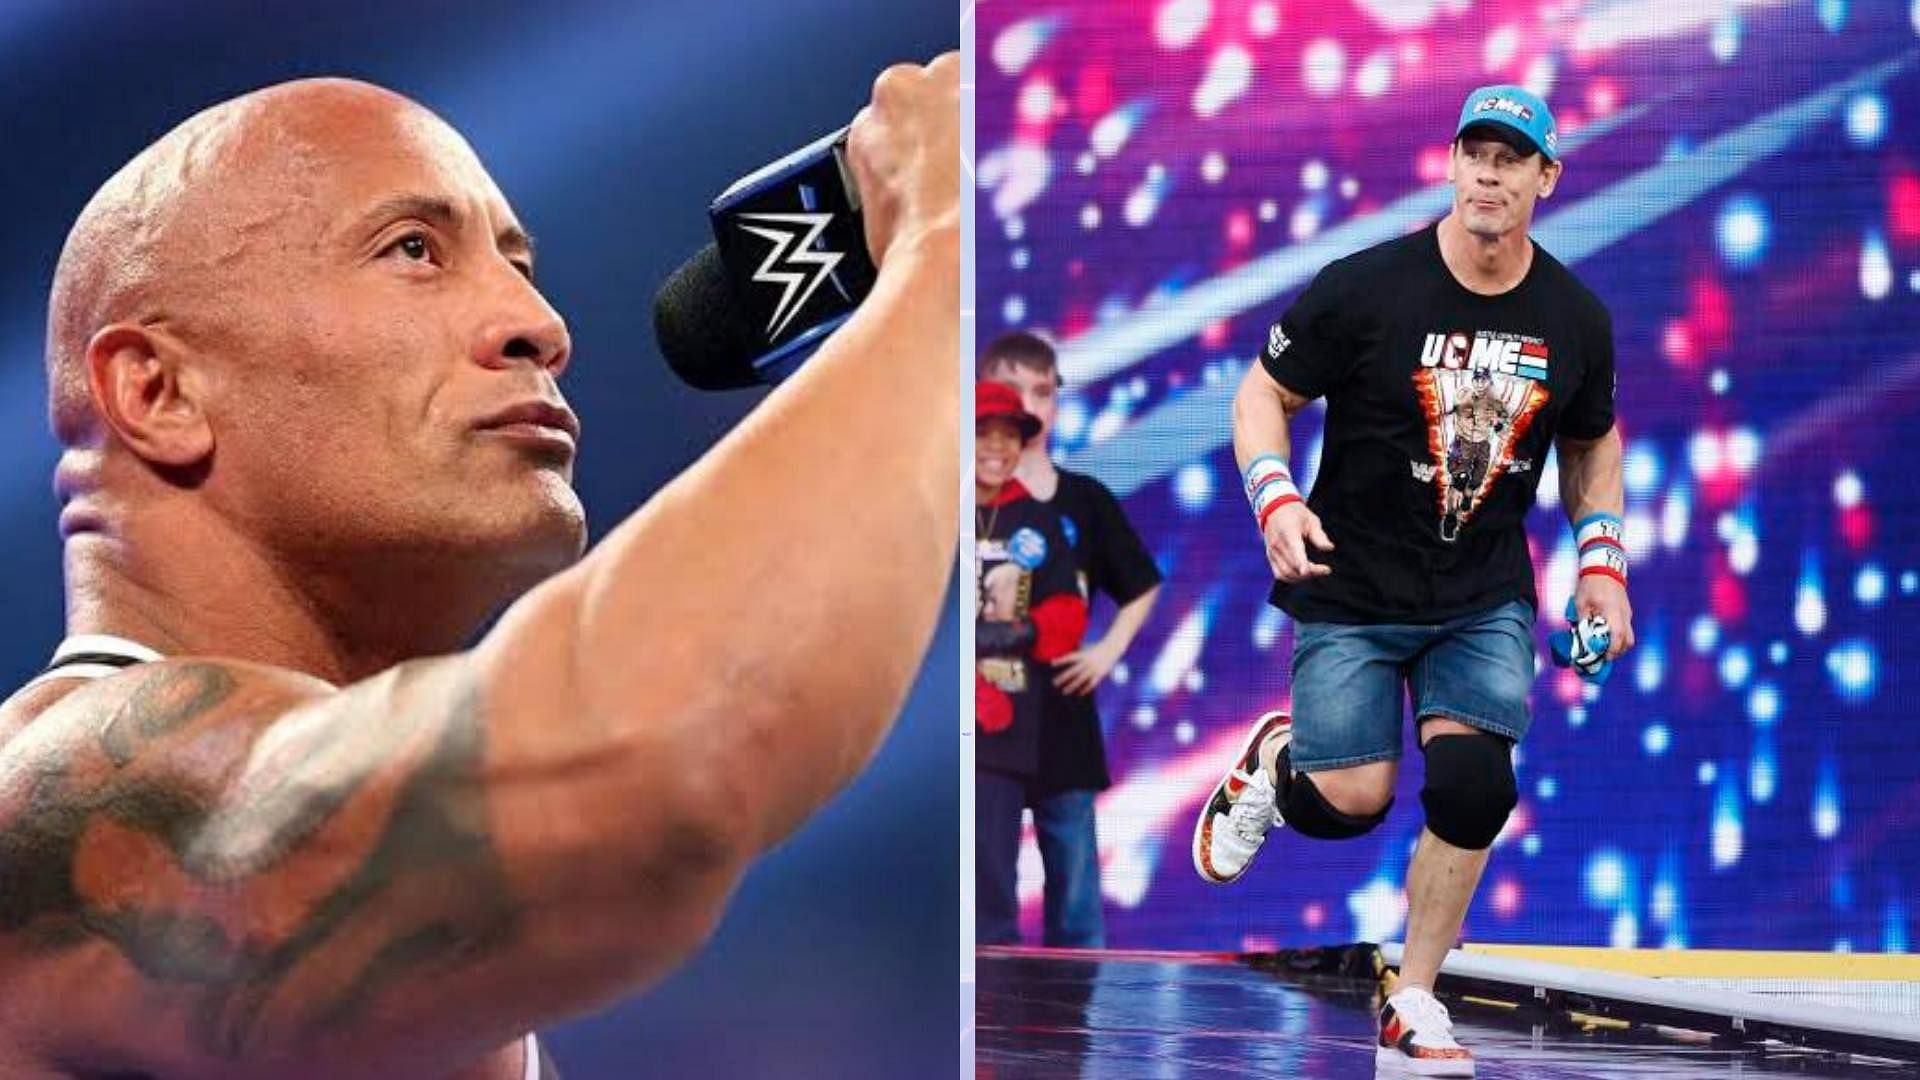 The Rock and John Cena faced each other at consecutive Wrestlemanias